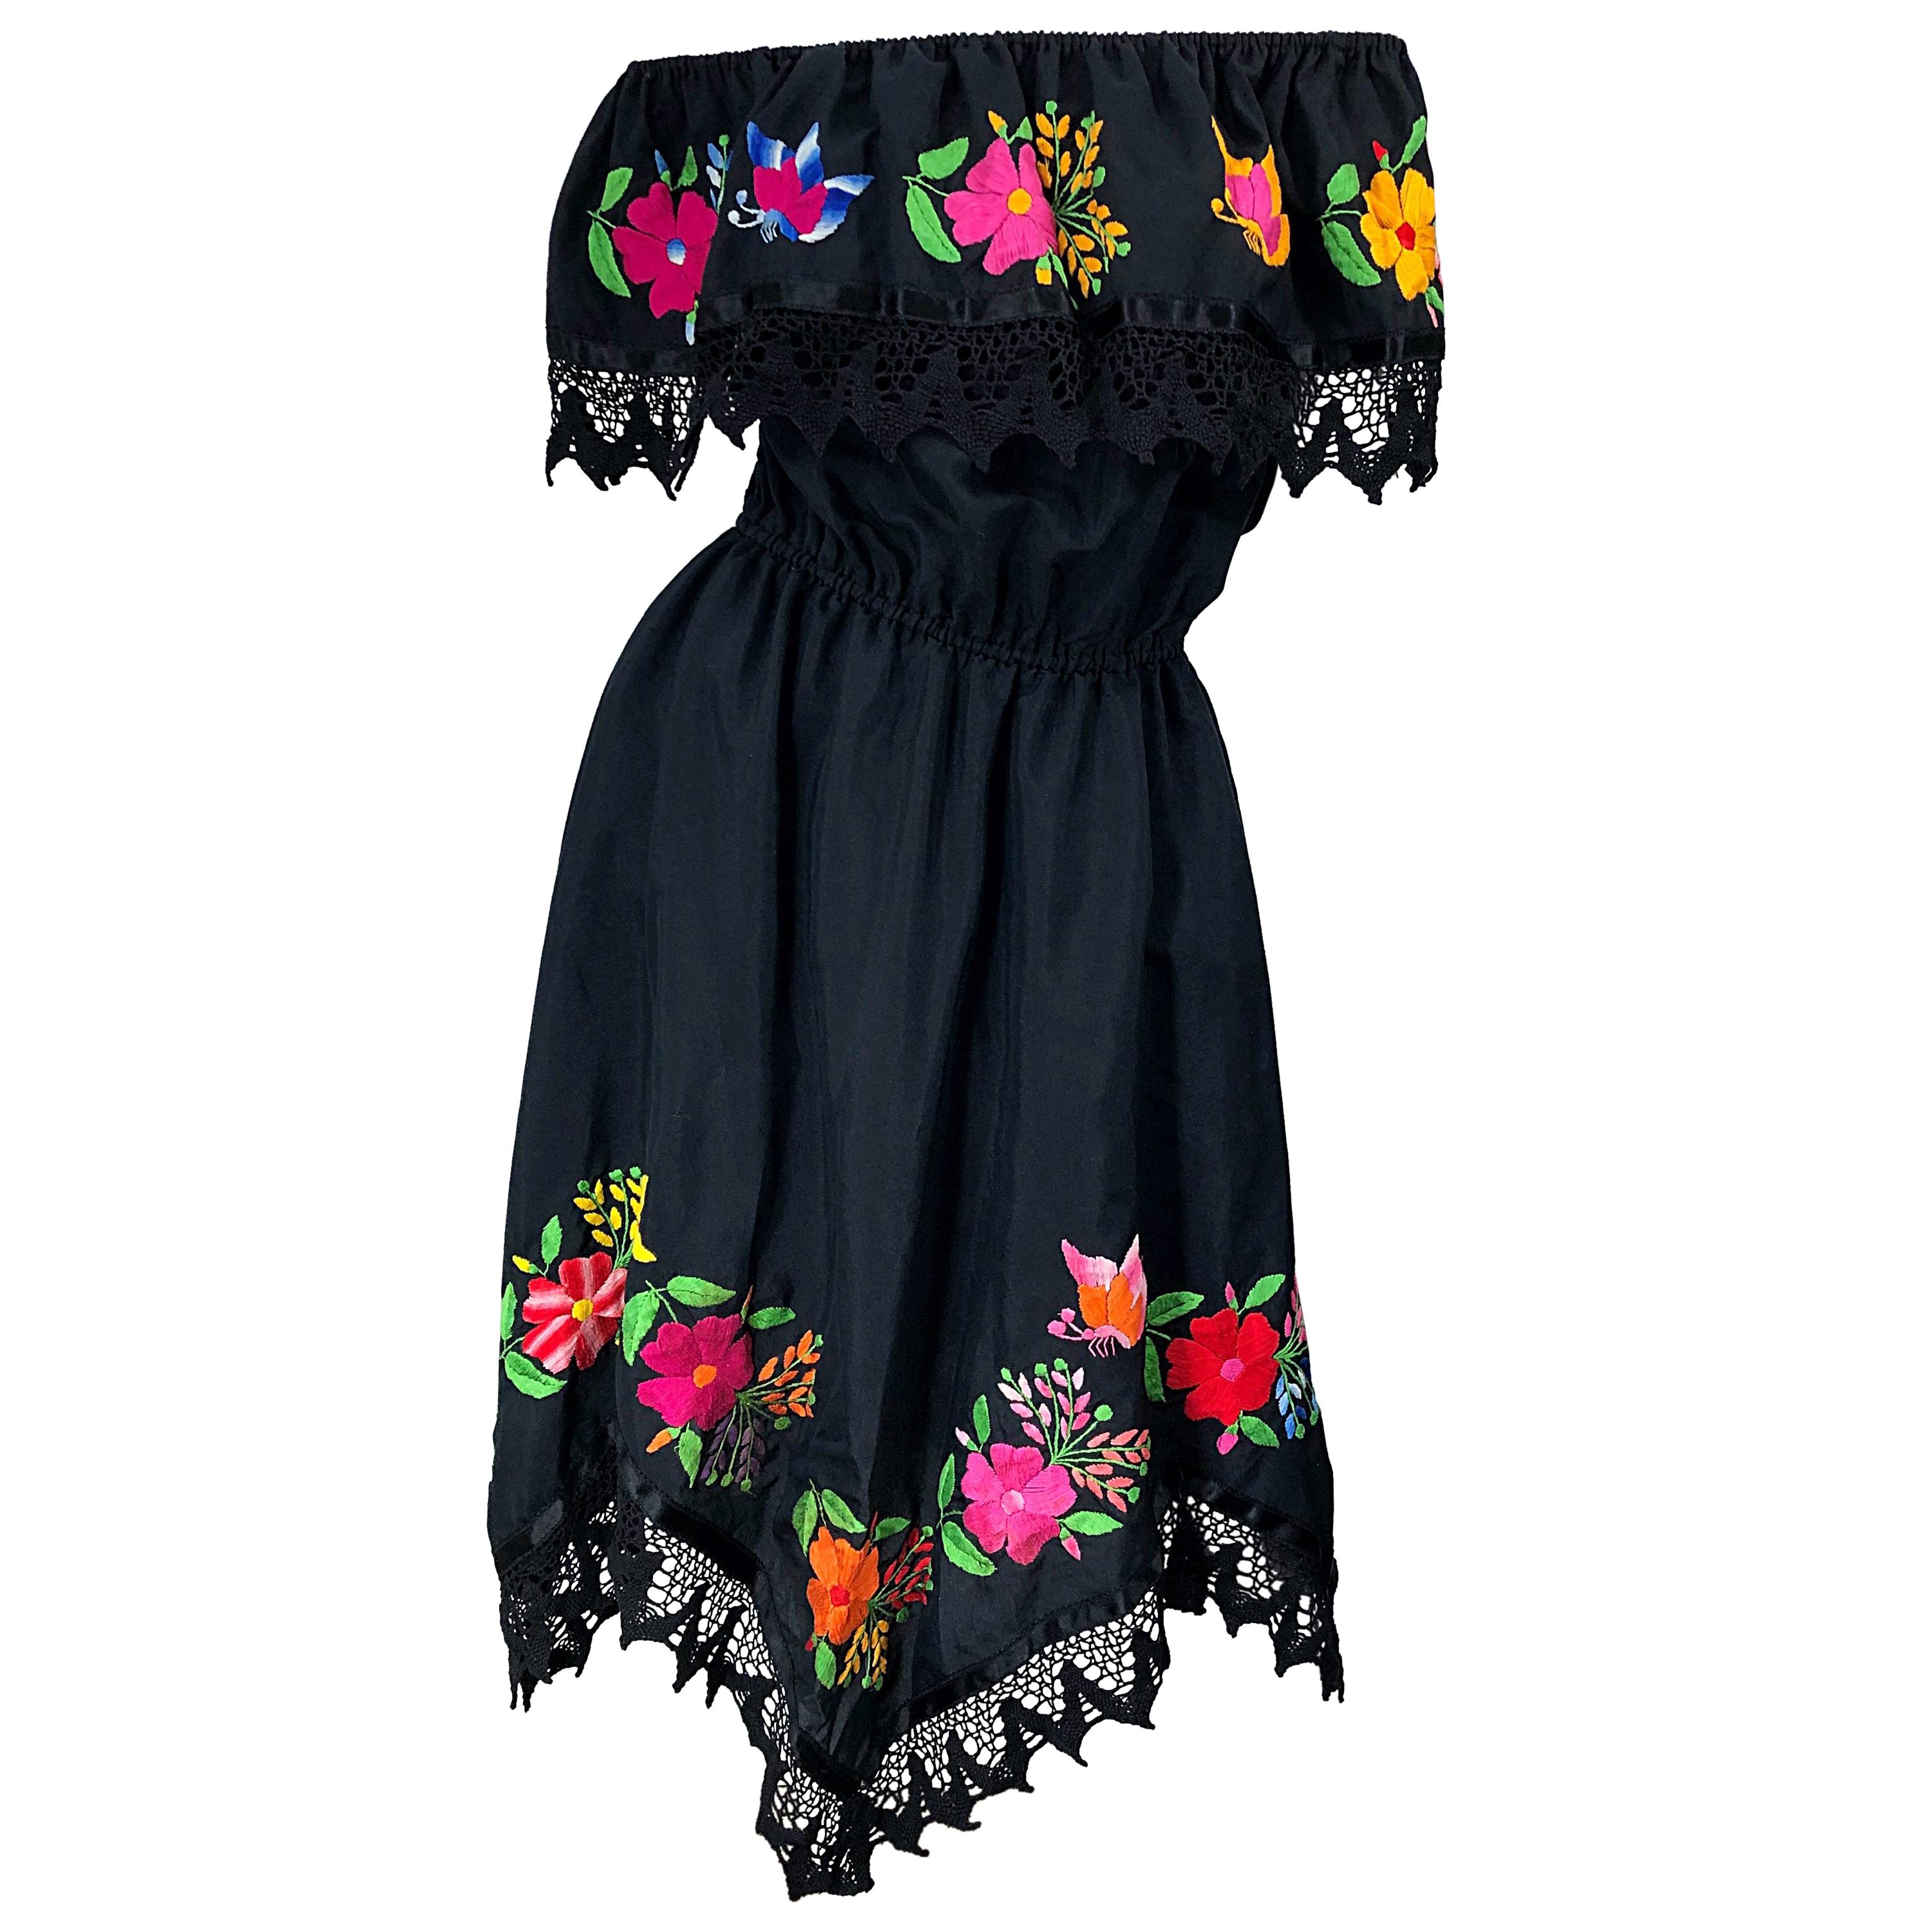 1970s Boho Chic Black Colorful Cotton Embroidered Handkerchief Hem Vintage Dress